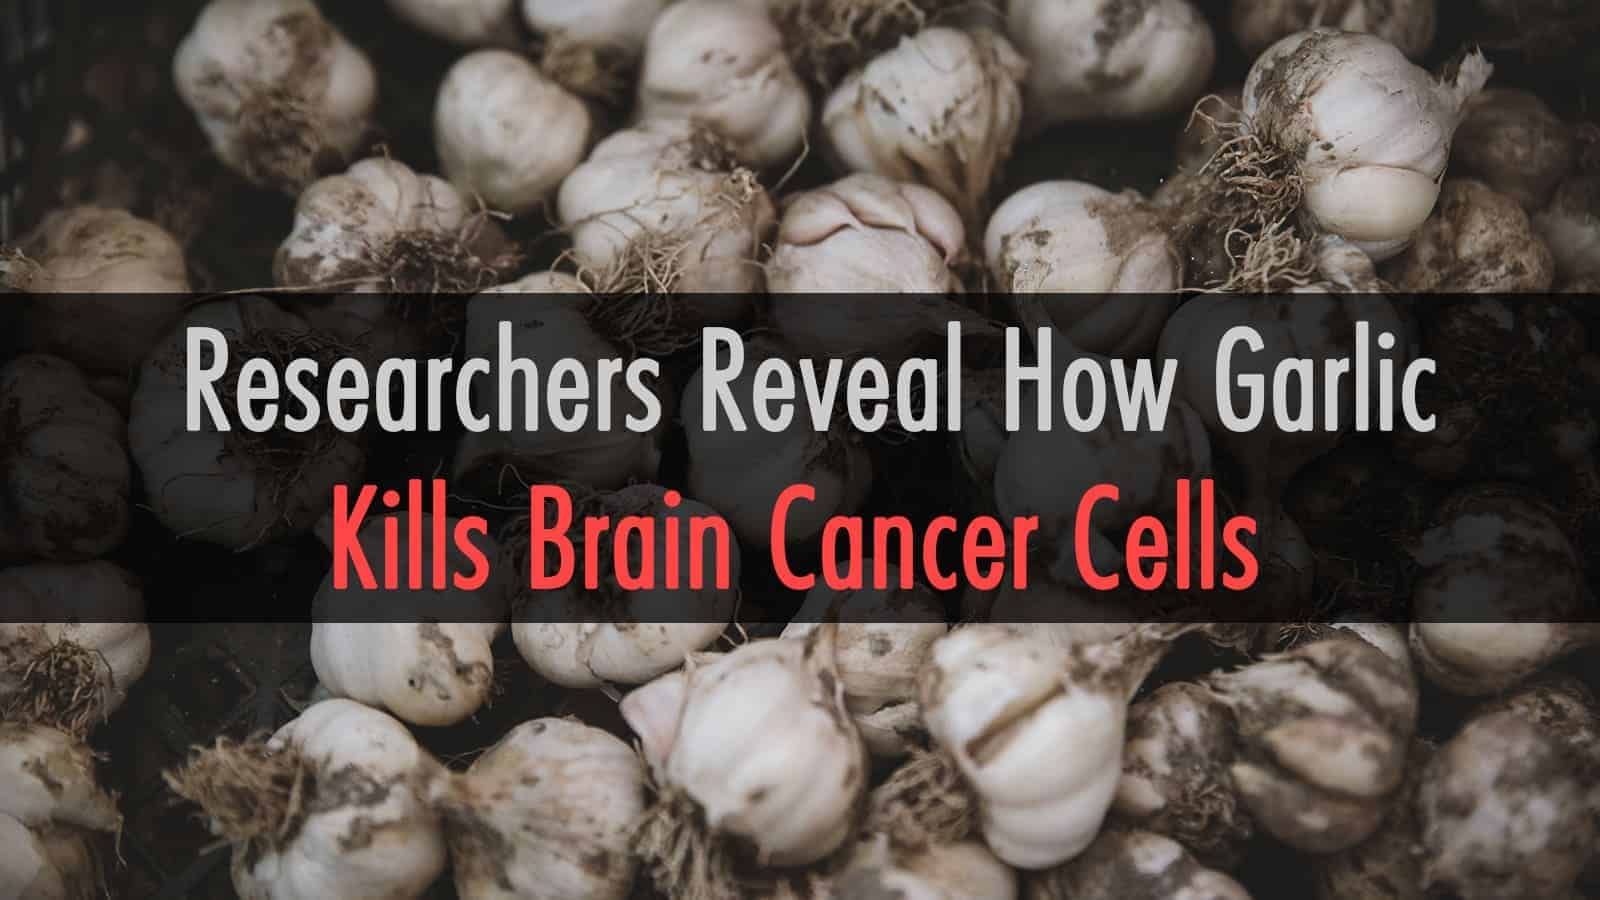 Garlic kills brain cancer cells